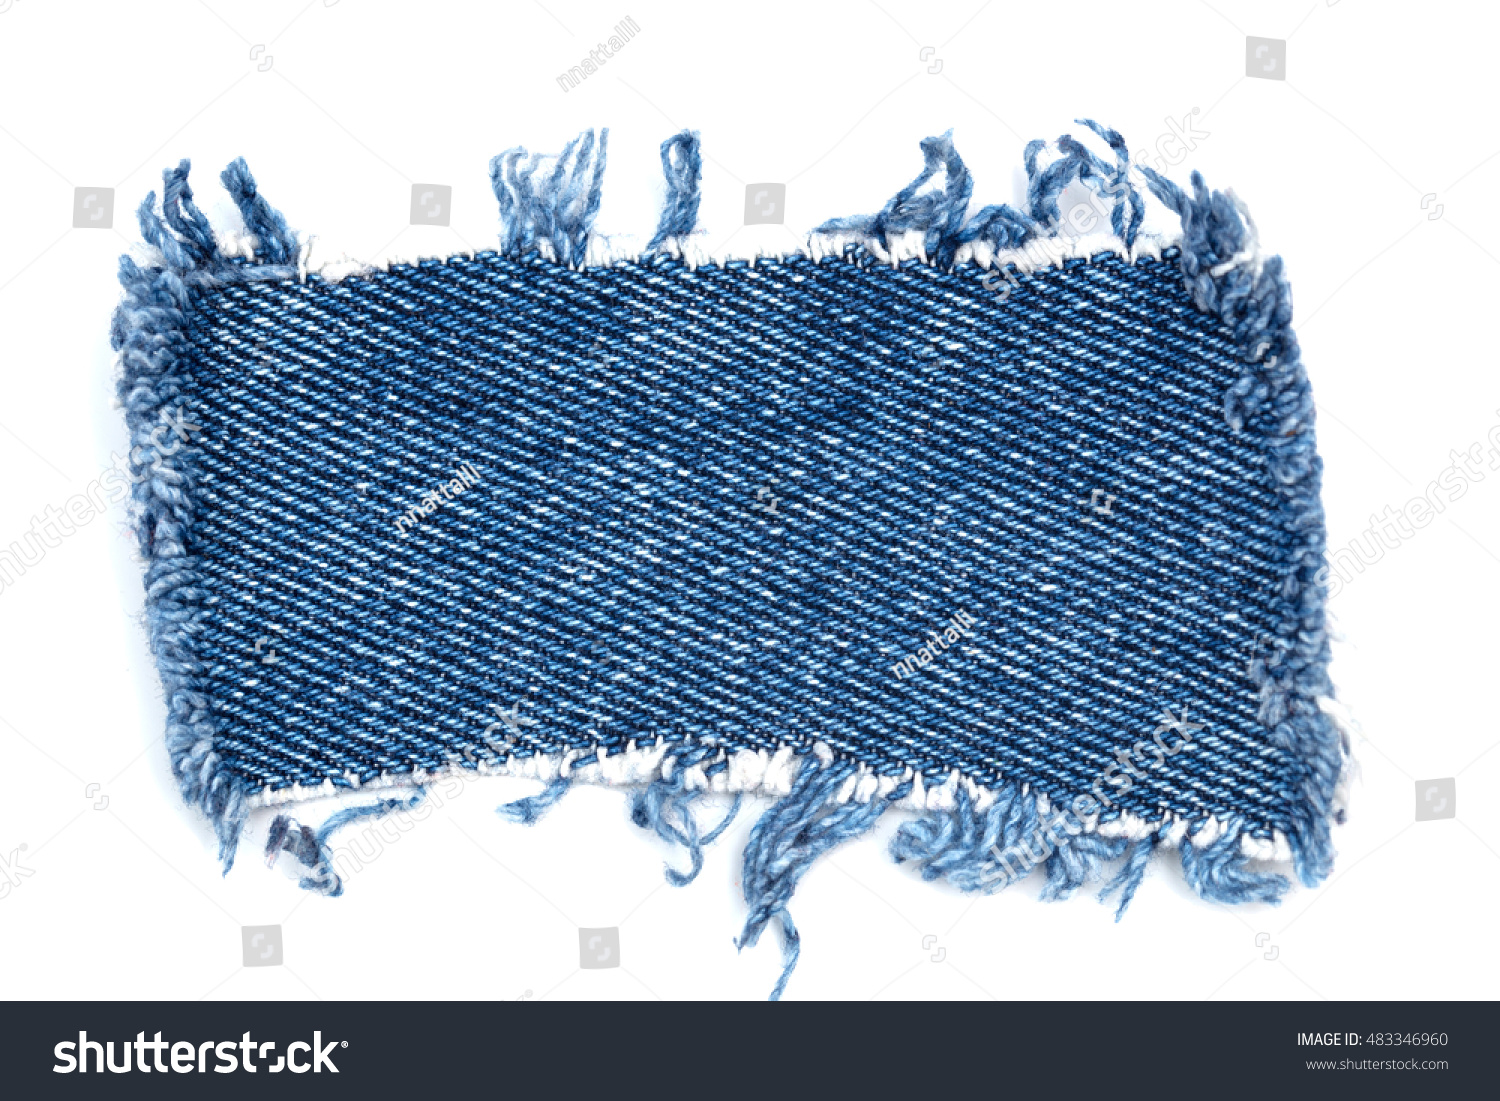 Destroyed Torn Denim Blue Jeans Frayed Stock Photo 483346960 - Shutterstock